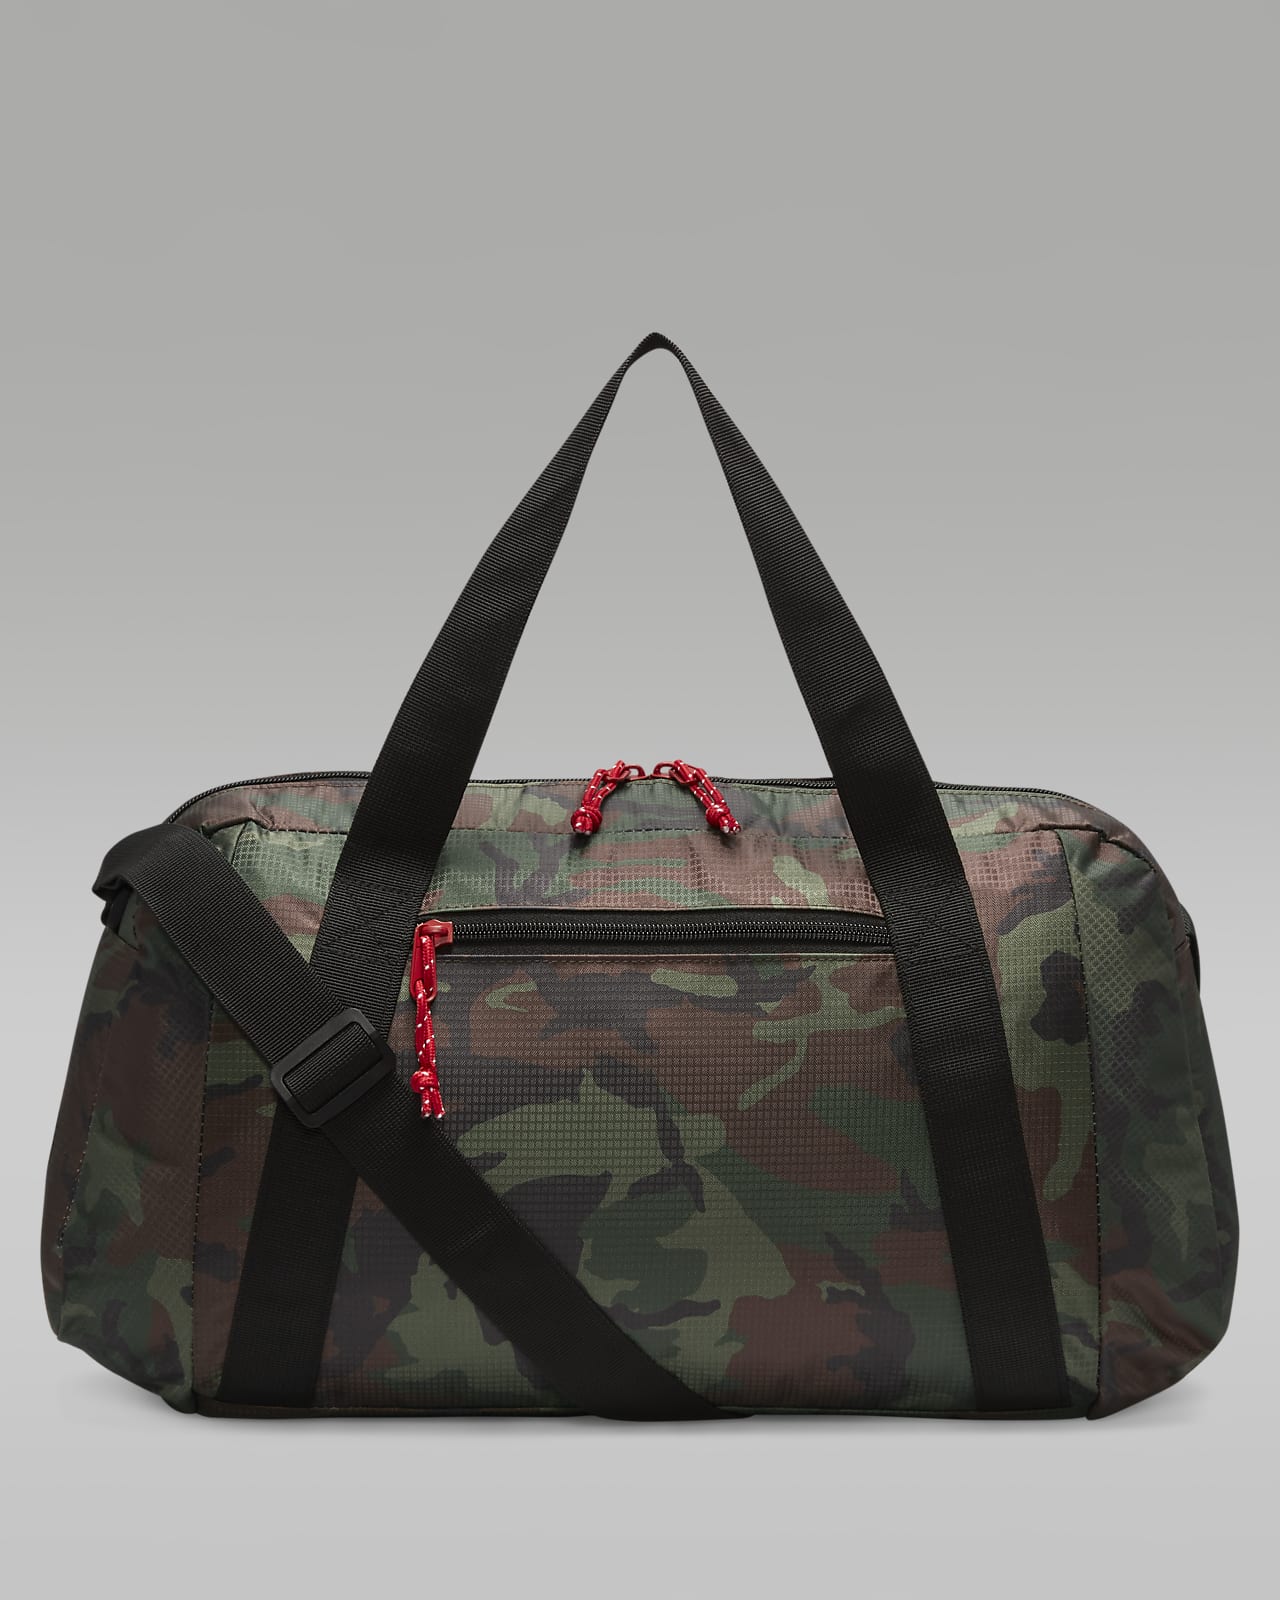 Nike Jordan Monogram Duffle Bag - Sold Out Nike Fashion Backpack Travel  Black